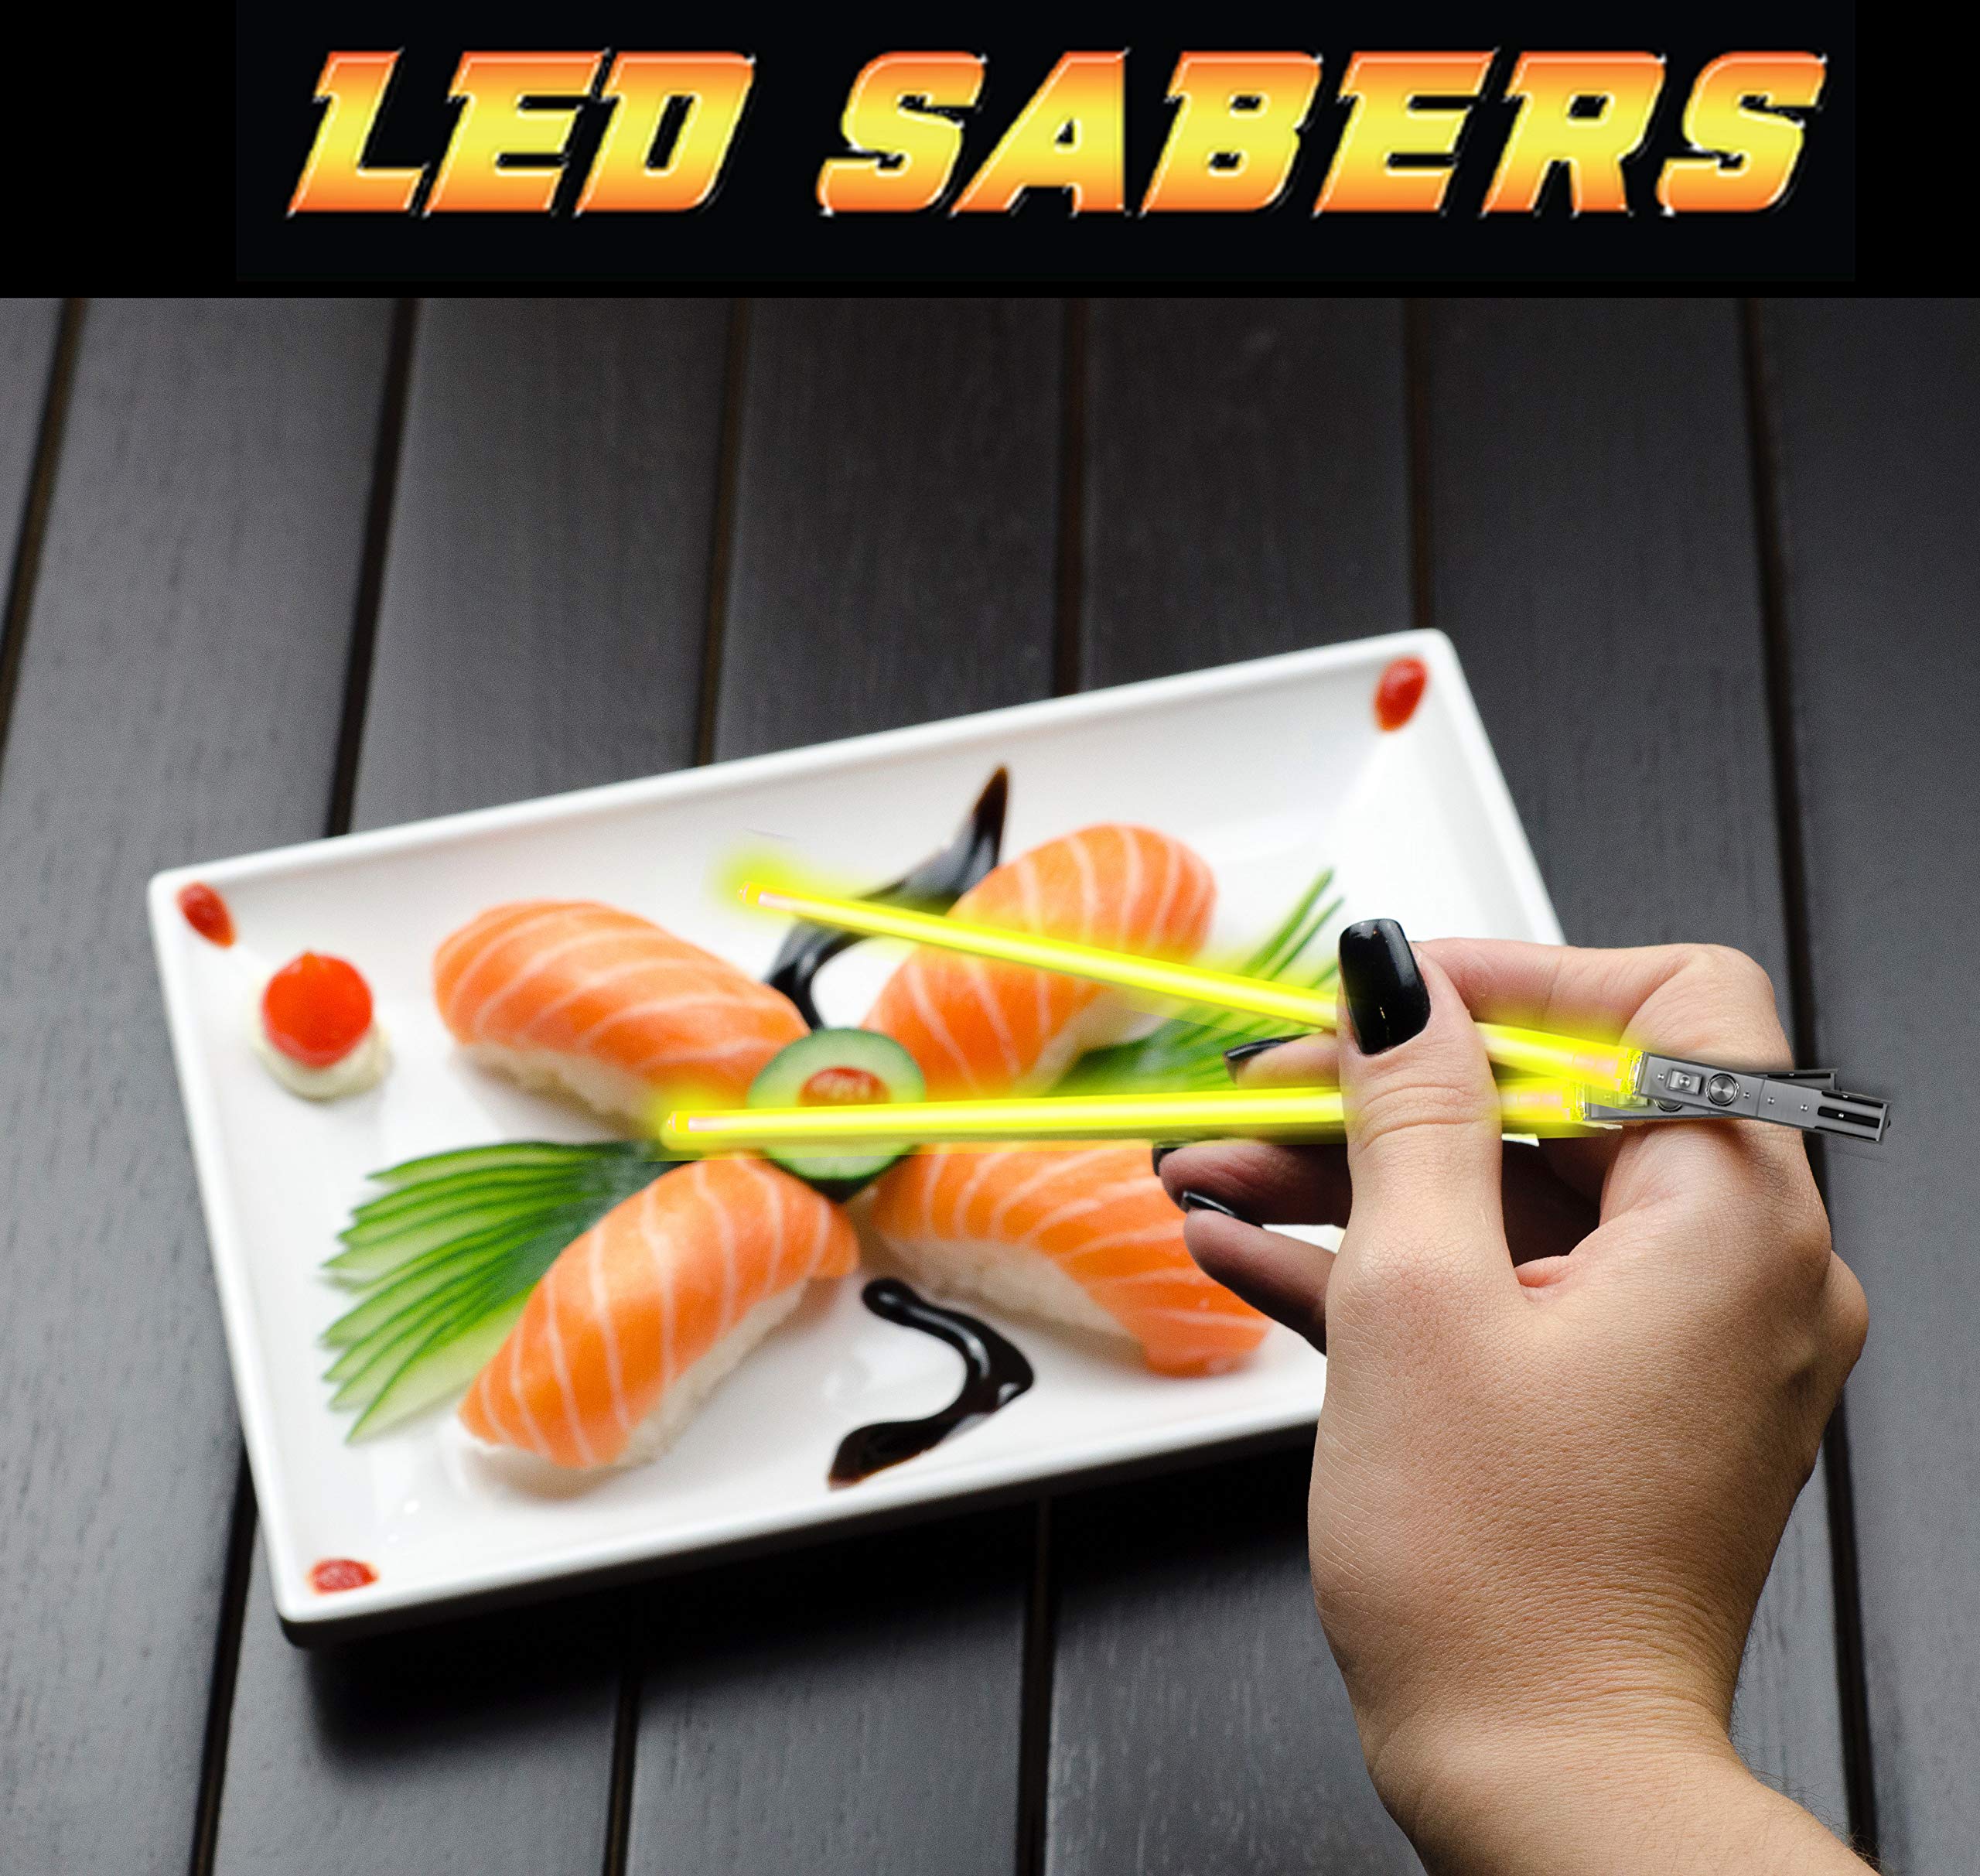 LIGHTSABER CHOPSTICKS LIGHT UP STAR WARS LED Glowing Light Saber Chop Sticks REUSABLE Sushi Lightup Sabers - Removable Handle Dishwasher Safe - Premium GIFT BOX & CARRY CASE Included - YELLOW 1 PAIR